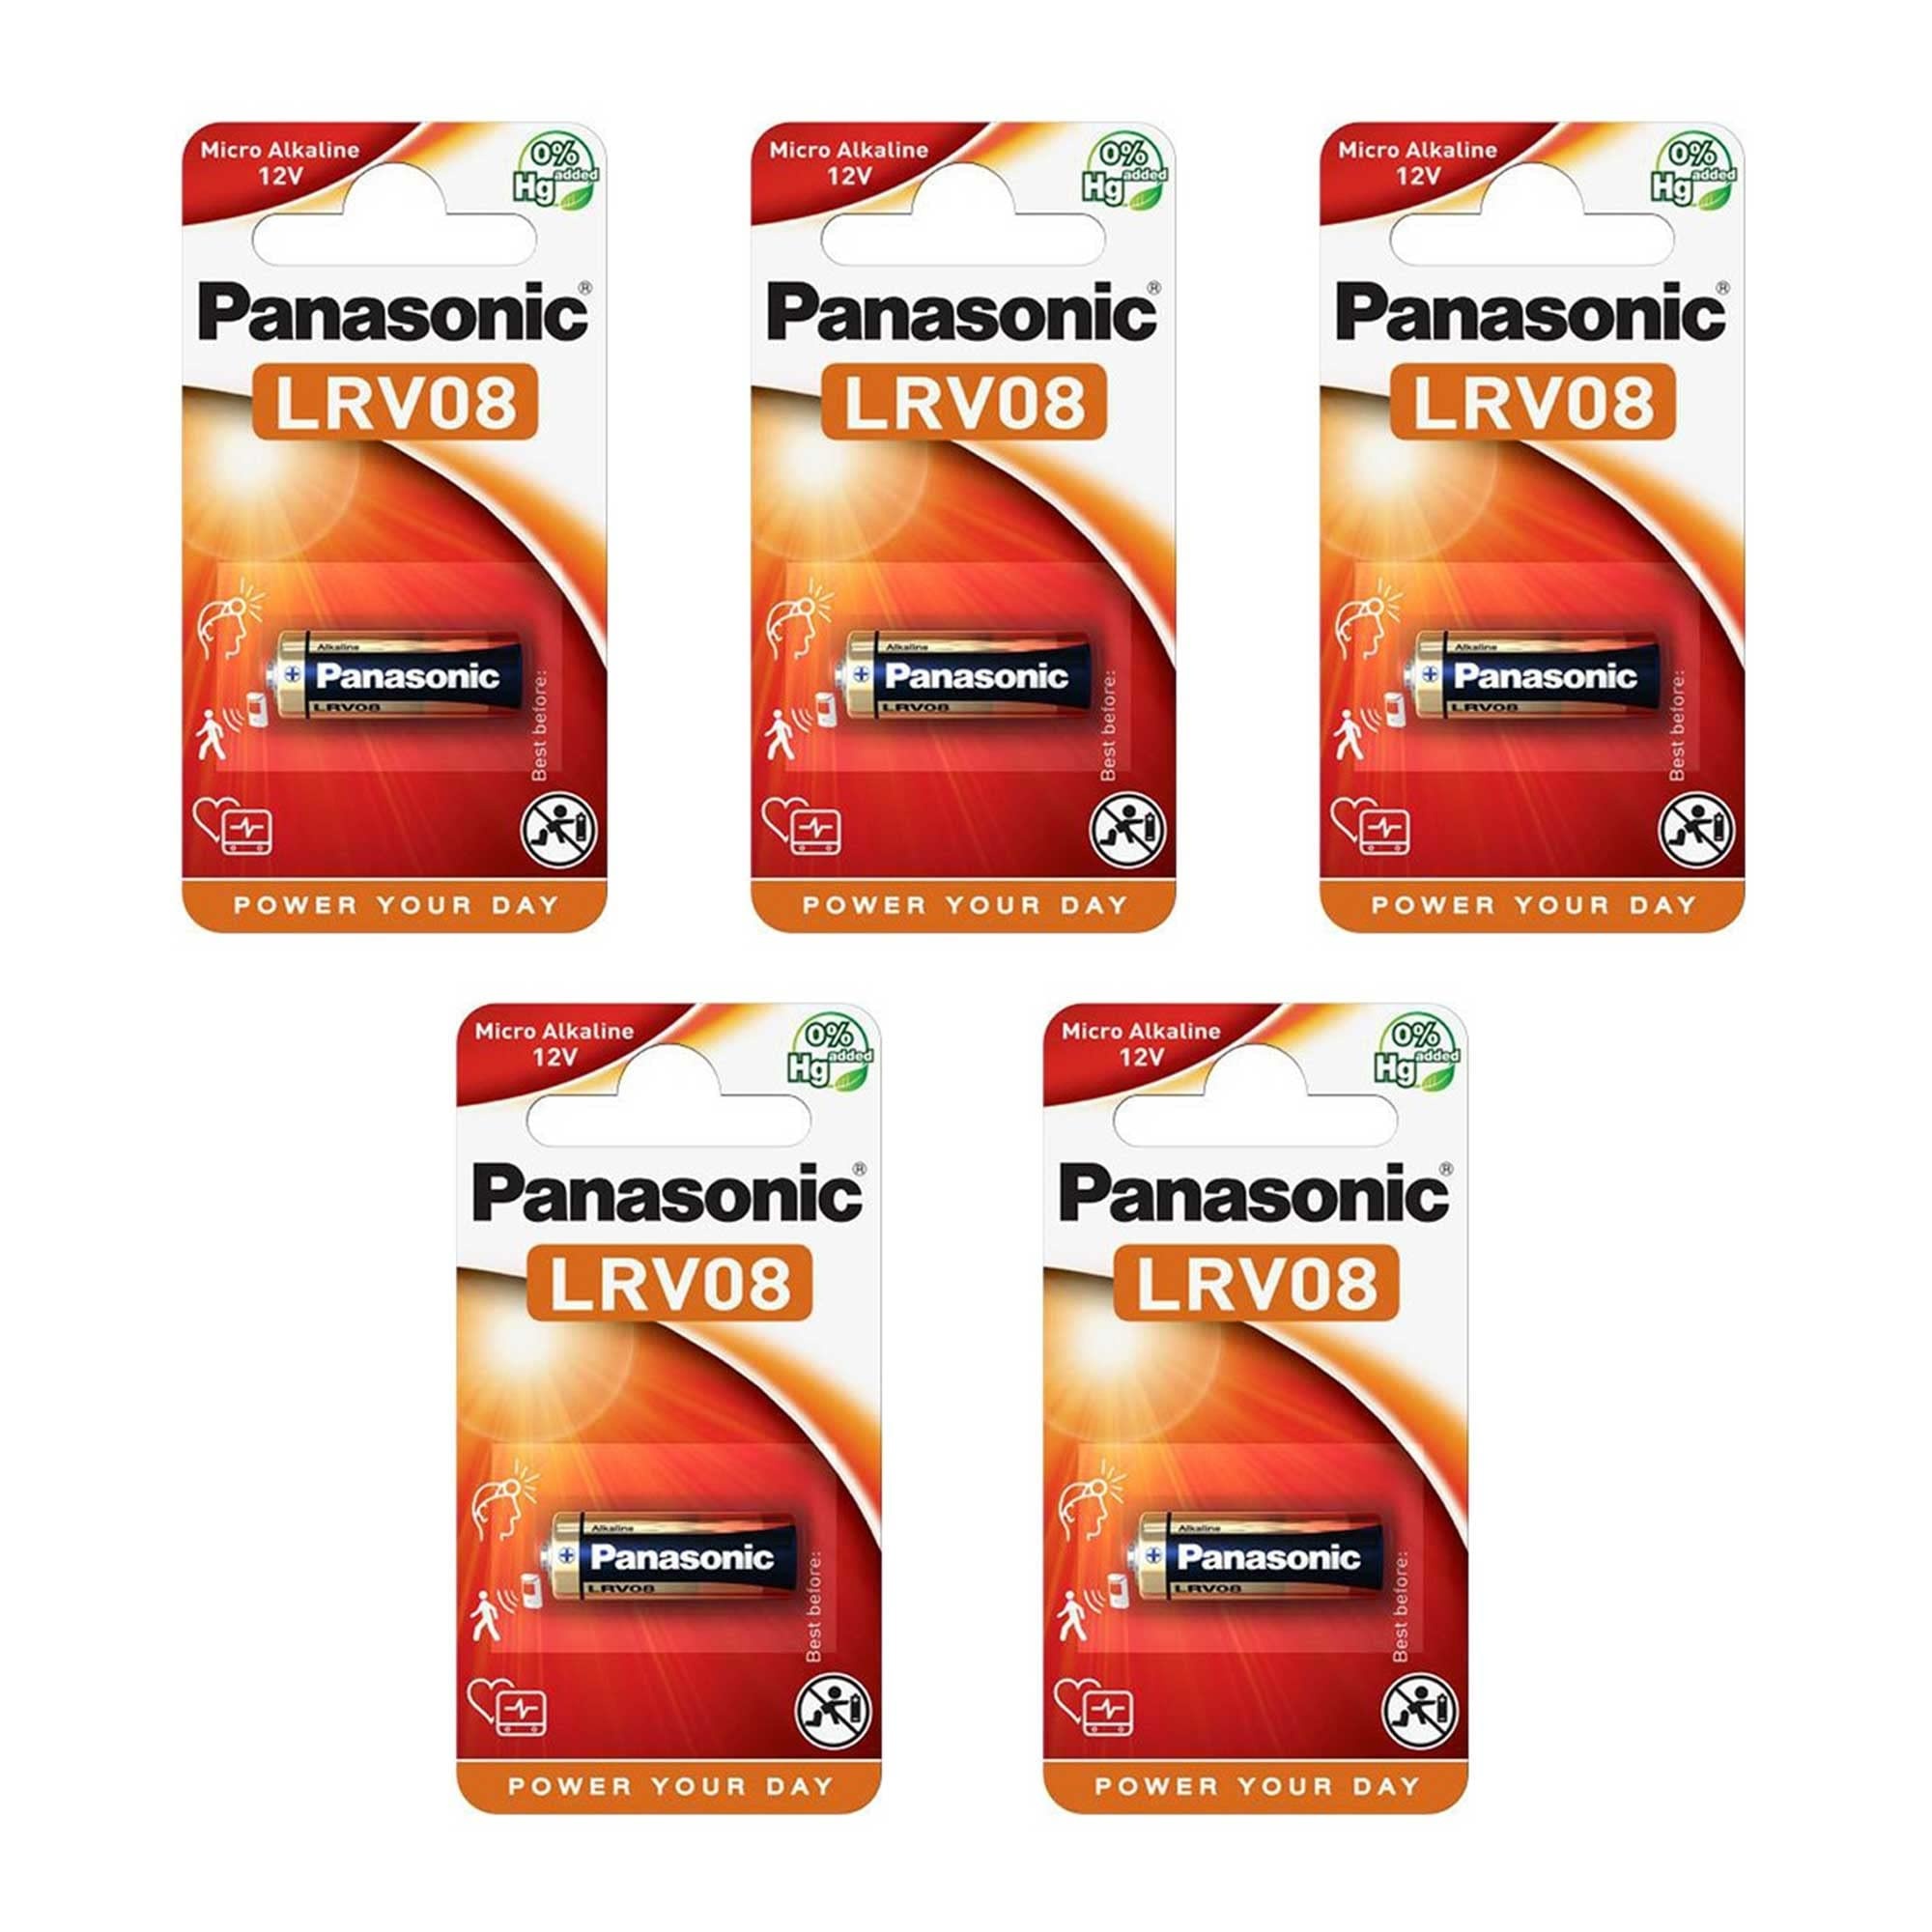 Bild von Panasonic A23 23A 12V L1028F Alkaline Batterie - 1x Blister